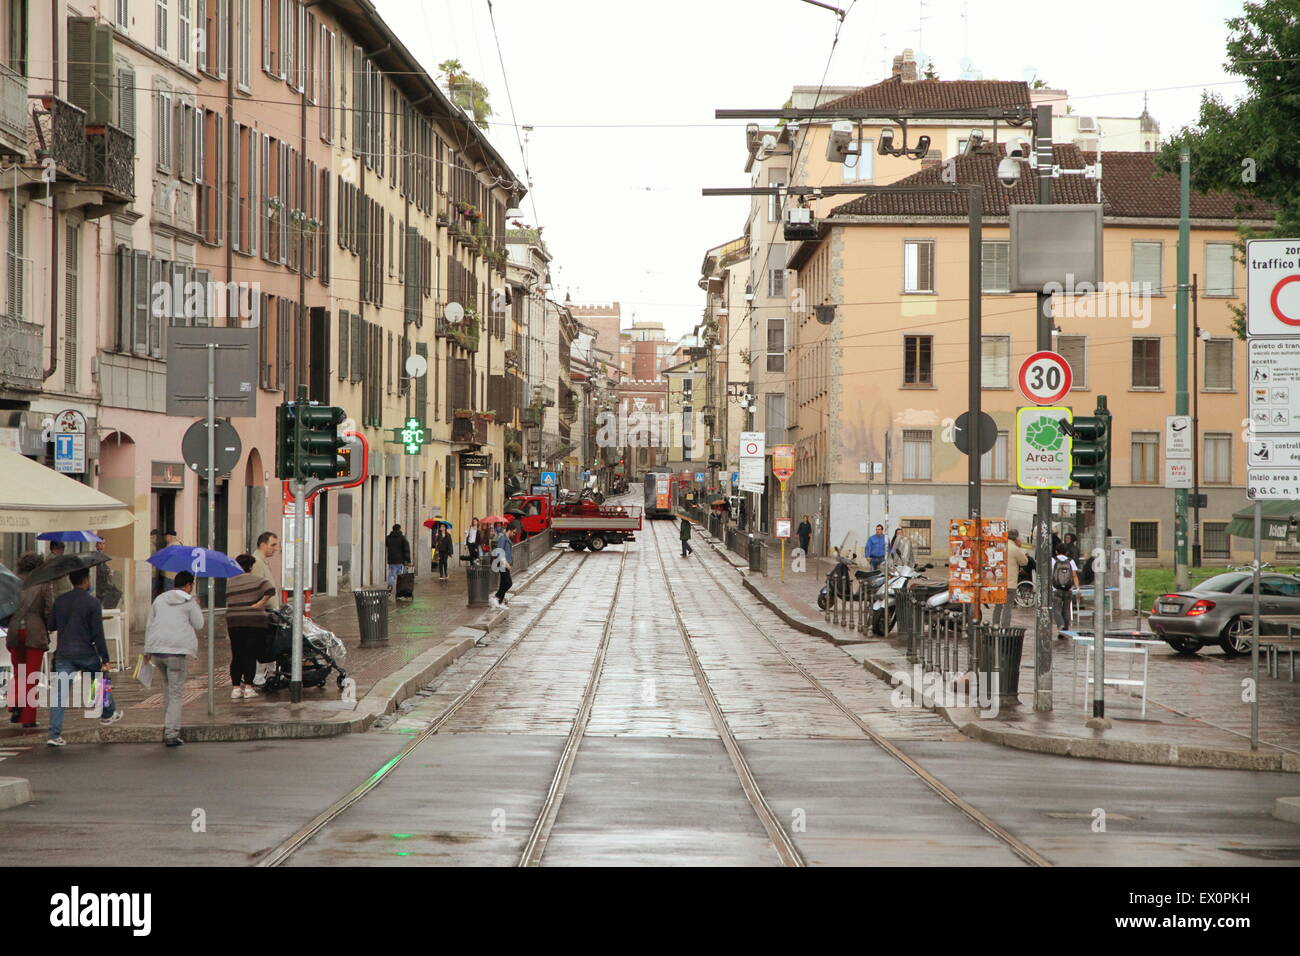 Corso di Porta Ticinese in Milan, Italy Stock Photo - Alamy